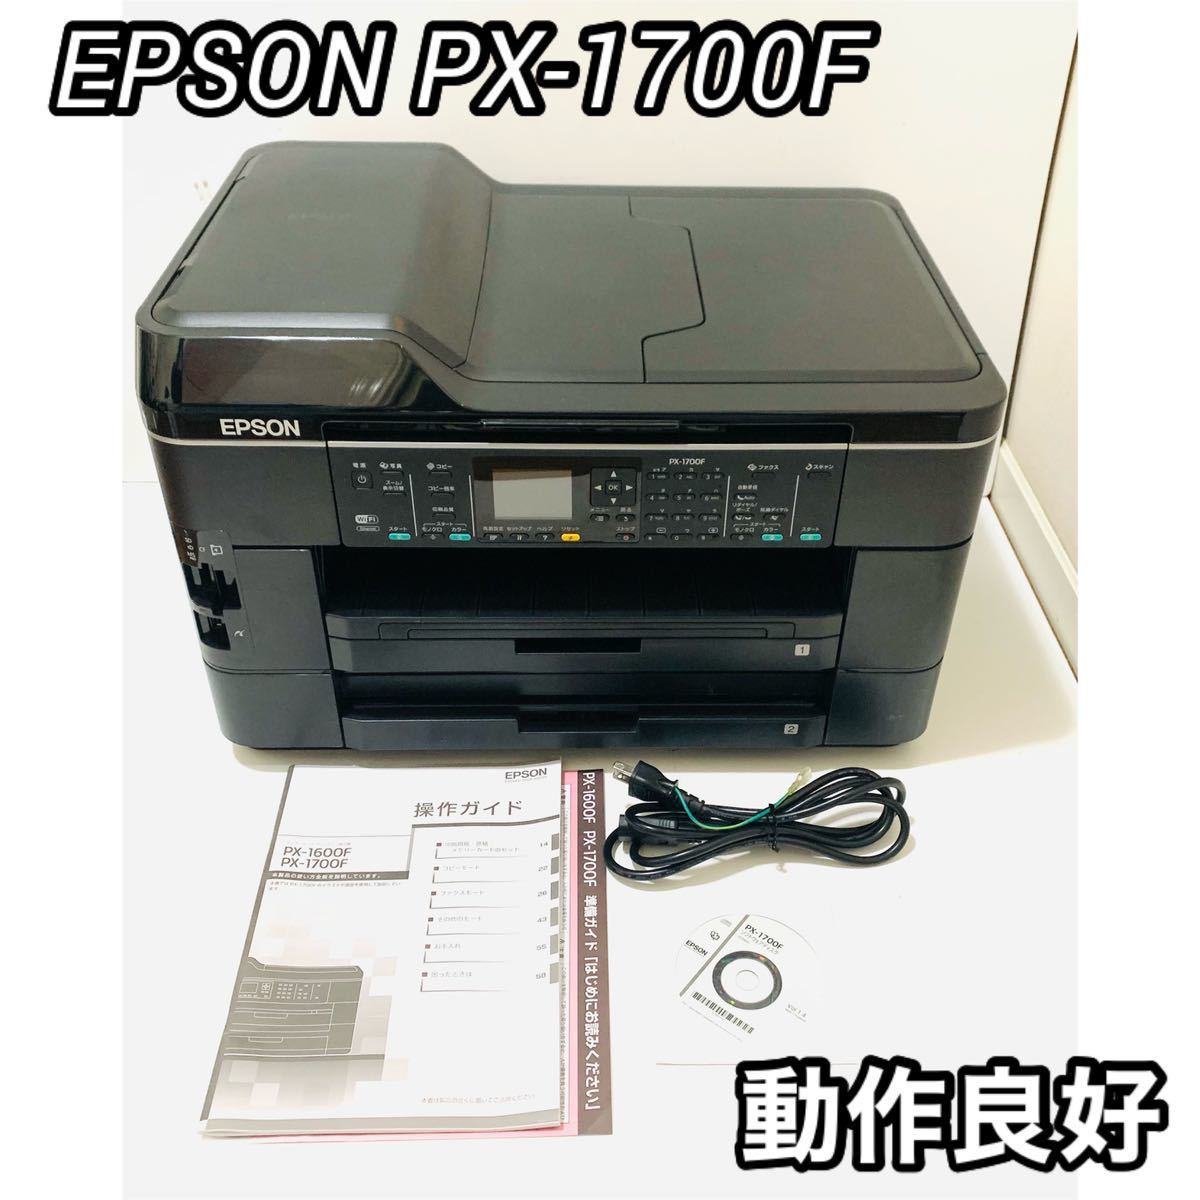 Y4167 動作良好 Epson Px 1700f エプソン 送料無料 Fax複合機 インクジェット Beringtime In